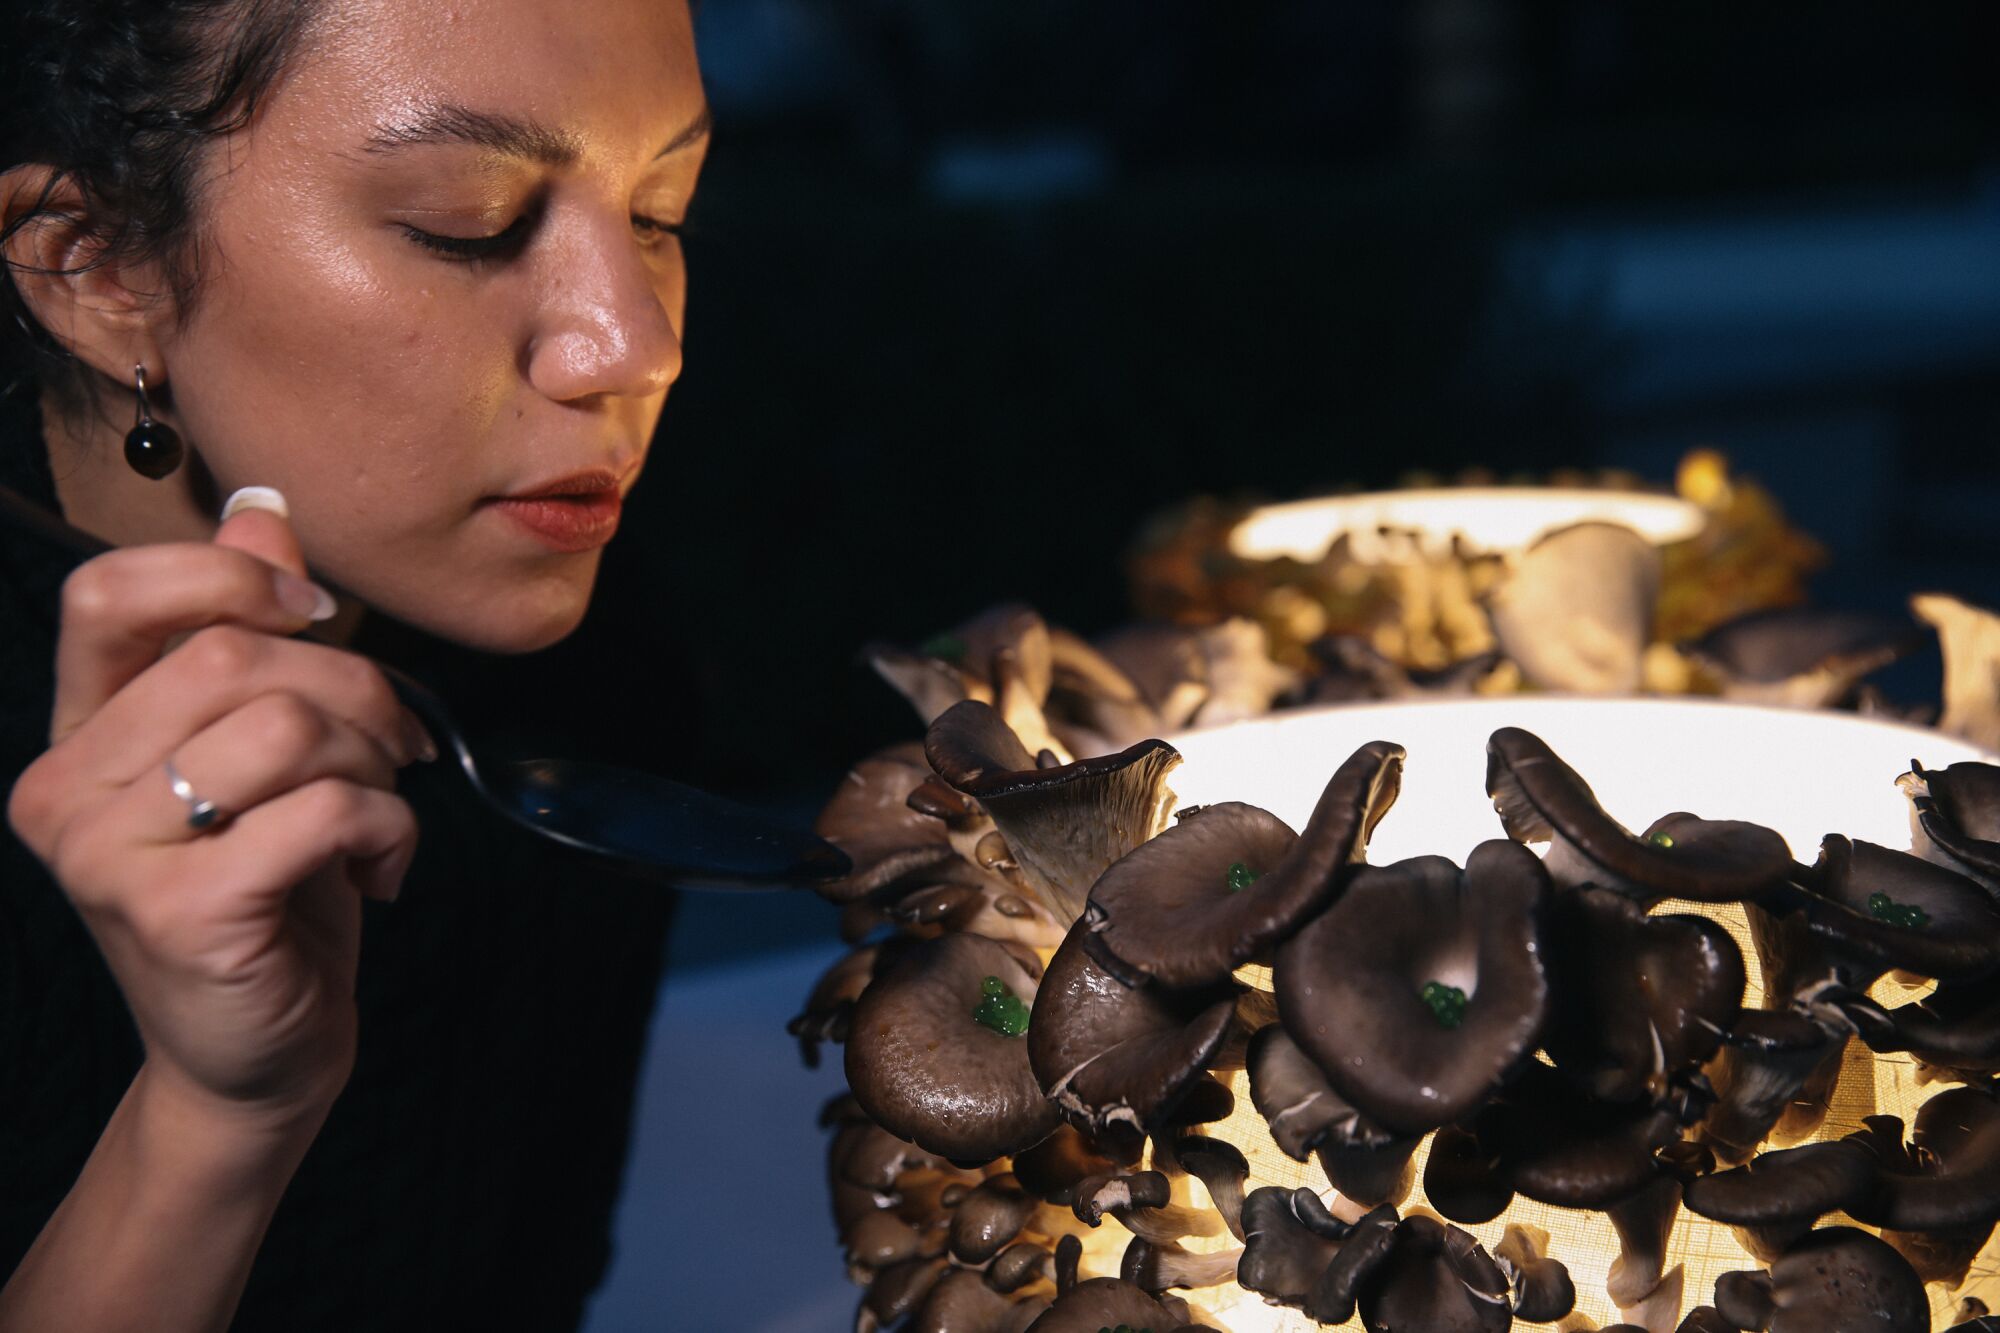 A woman spoons "algae" Caviar on oyster mushrooms for a mushroom and light installation.